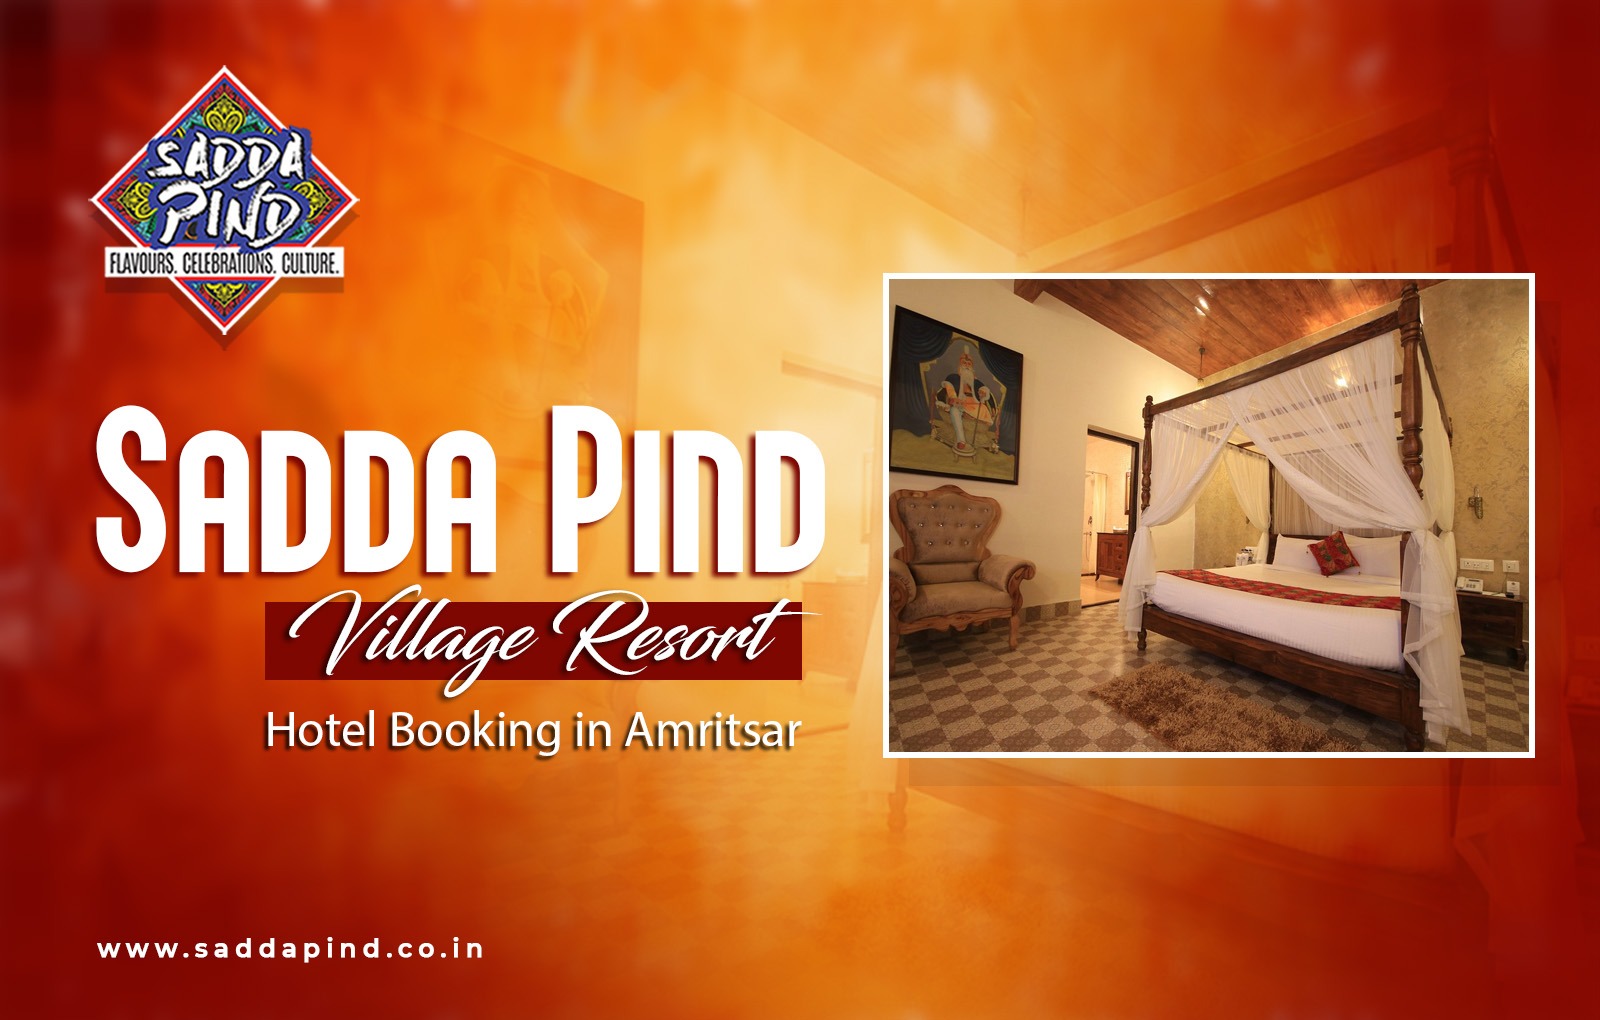 Hotel Booking in Amritsar: Experience Authentic Punjab Hospitality at Sadda Pind Village Resort
